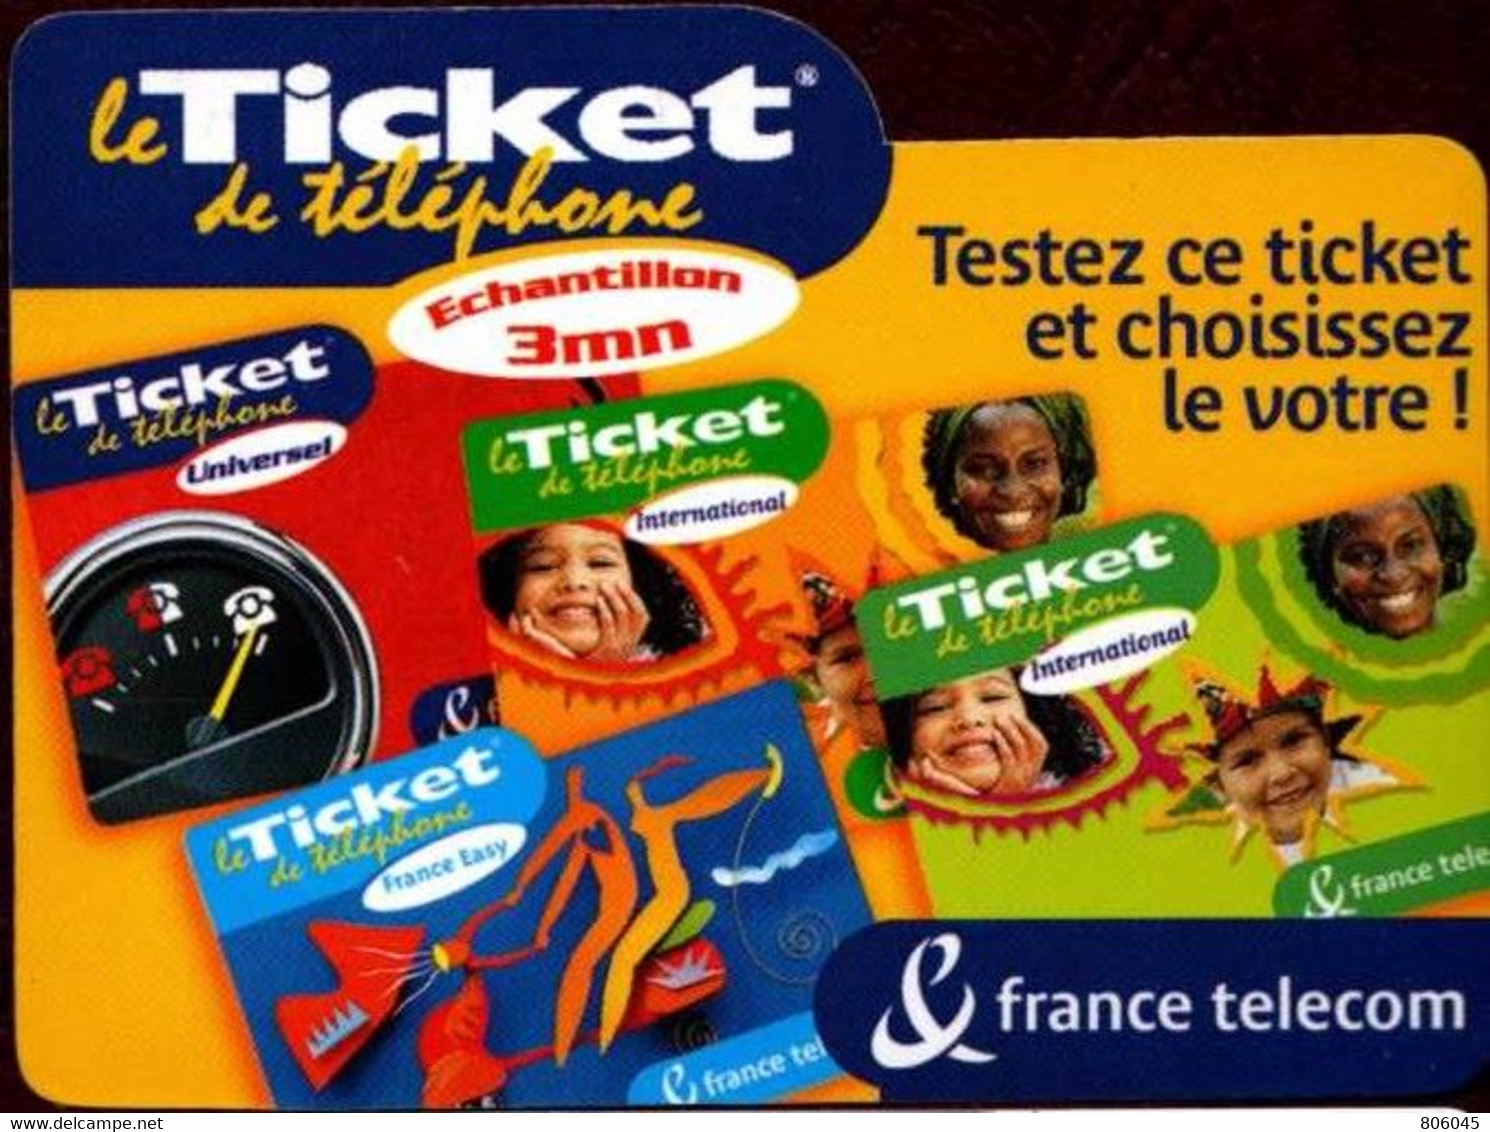 Ticket Télépone Orange - échantillon 3 Mn. - Biglietti FT